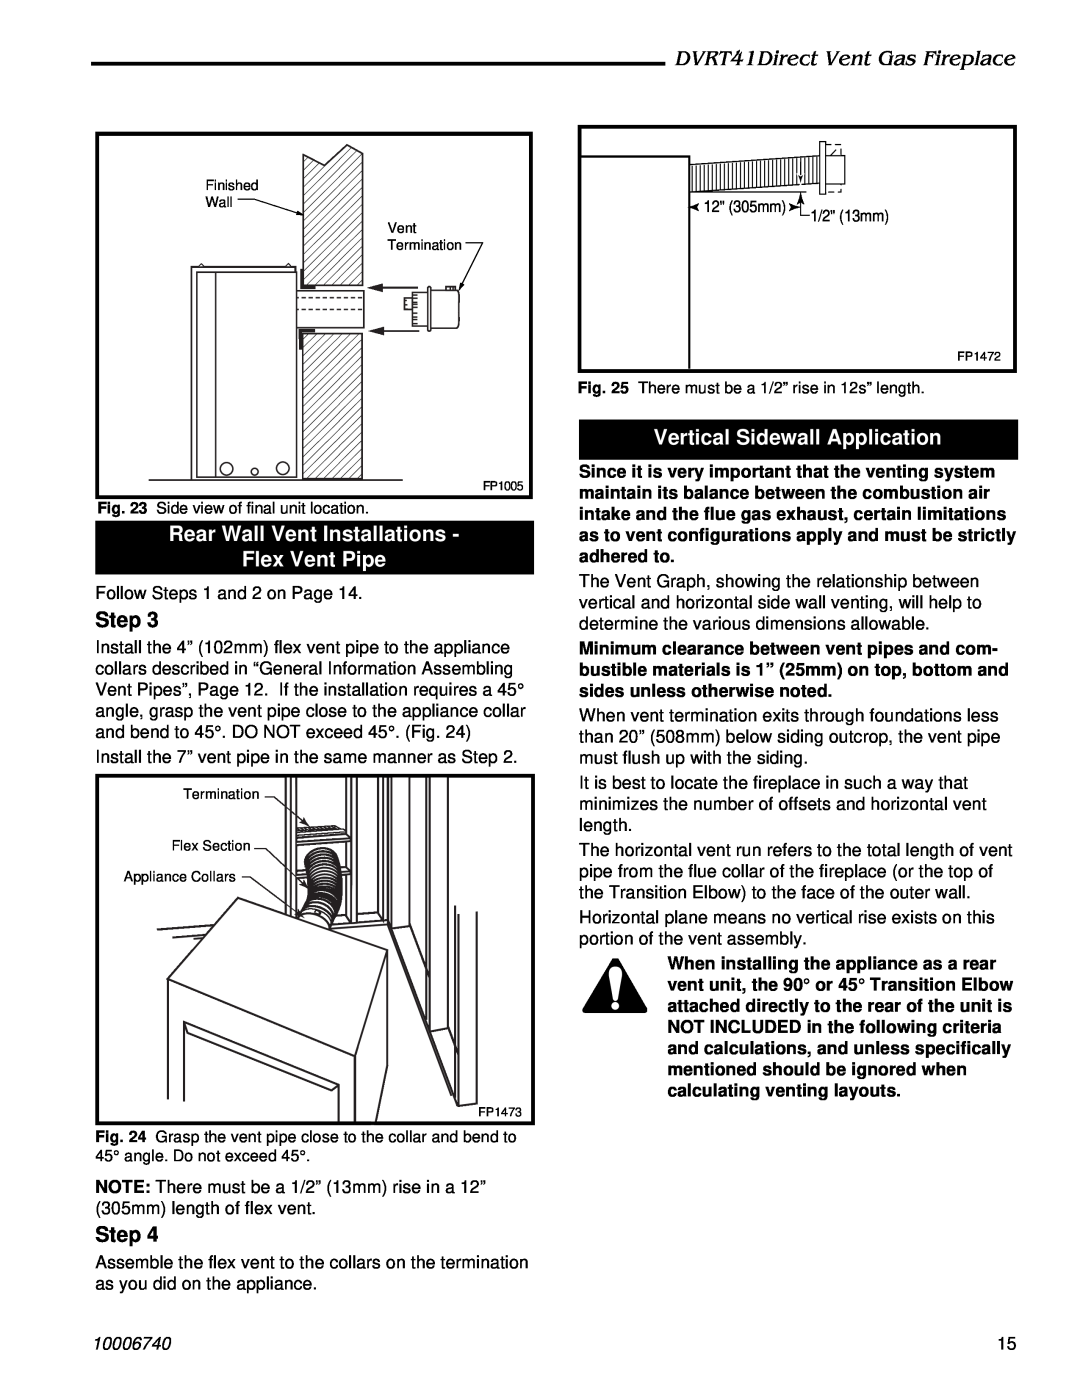 Vermont Casting DVRT41 manual Rear Wall Vent Installations Flex Vent Pipe, Vertical Sidewall Application, 10006740 